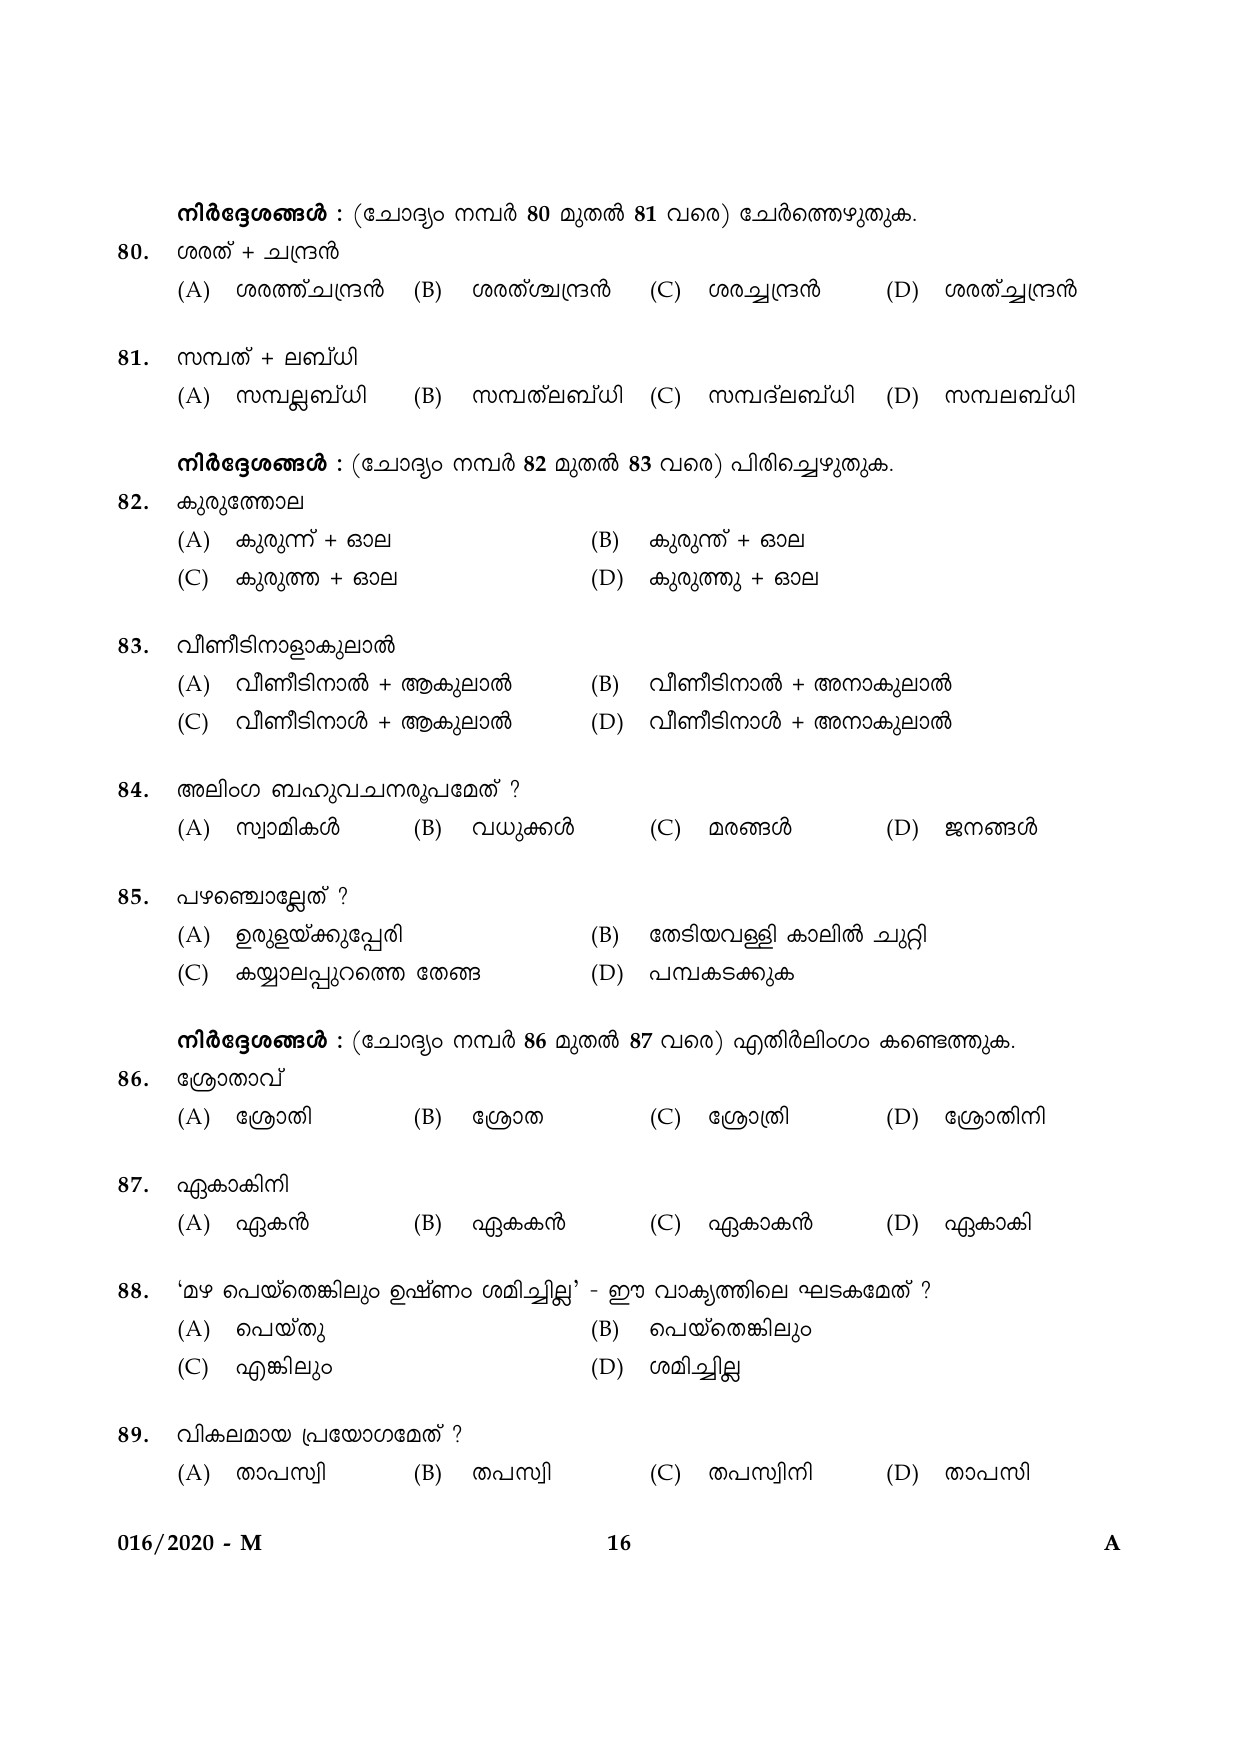 KAS Officer Trainee Malayalam Exam 2020 Code 0162020 15